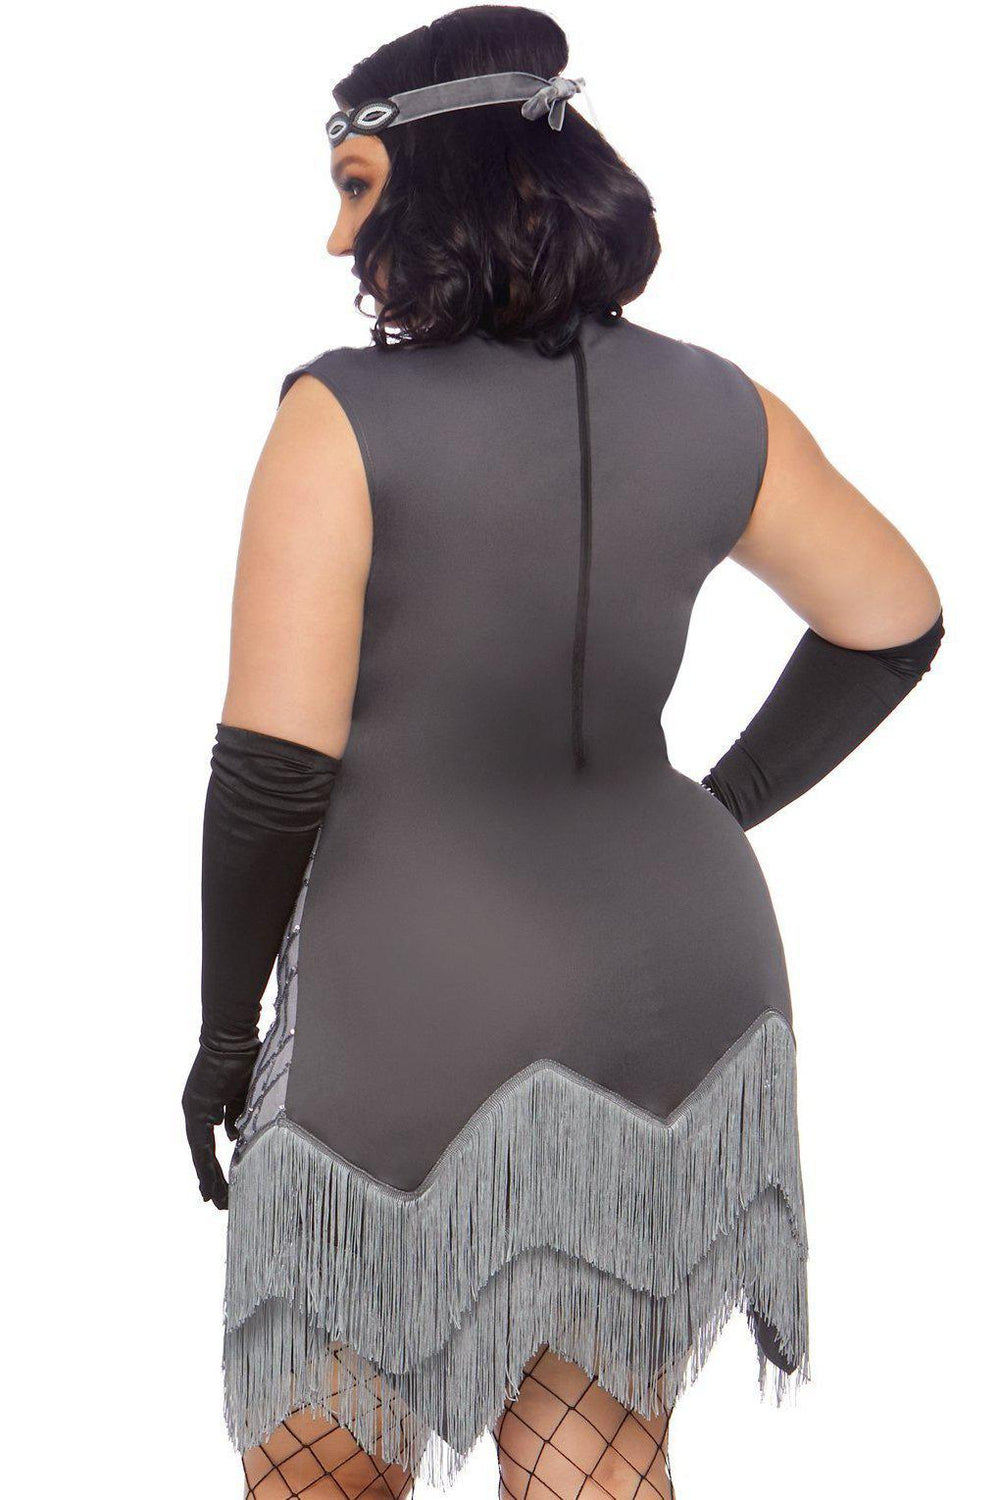 Plus Size Roaring Roxy Costume-Flapper Costumes-Leg Avenue-SEXYSHOES.COM